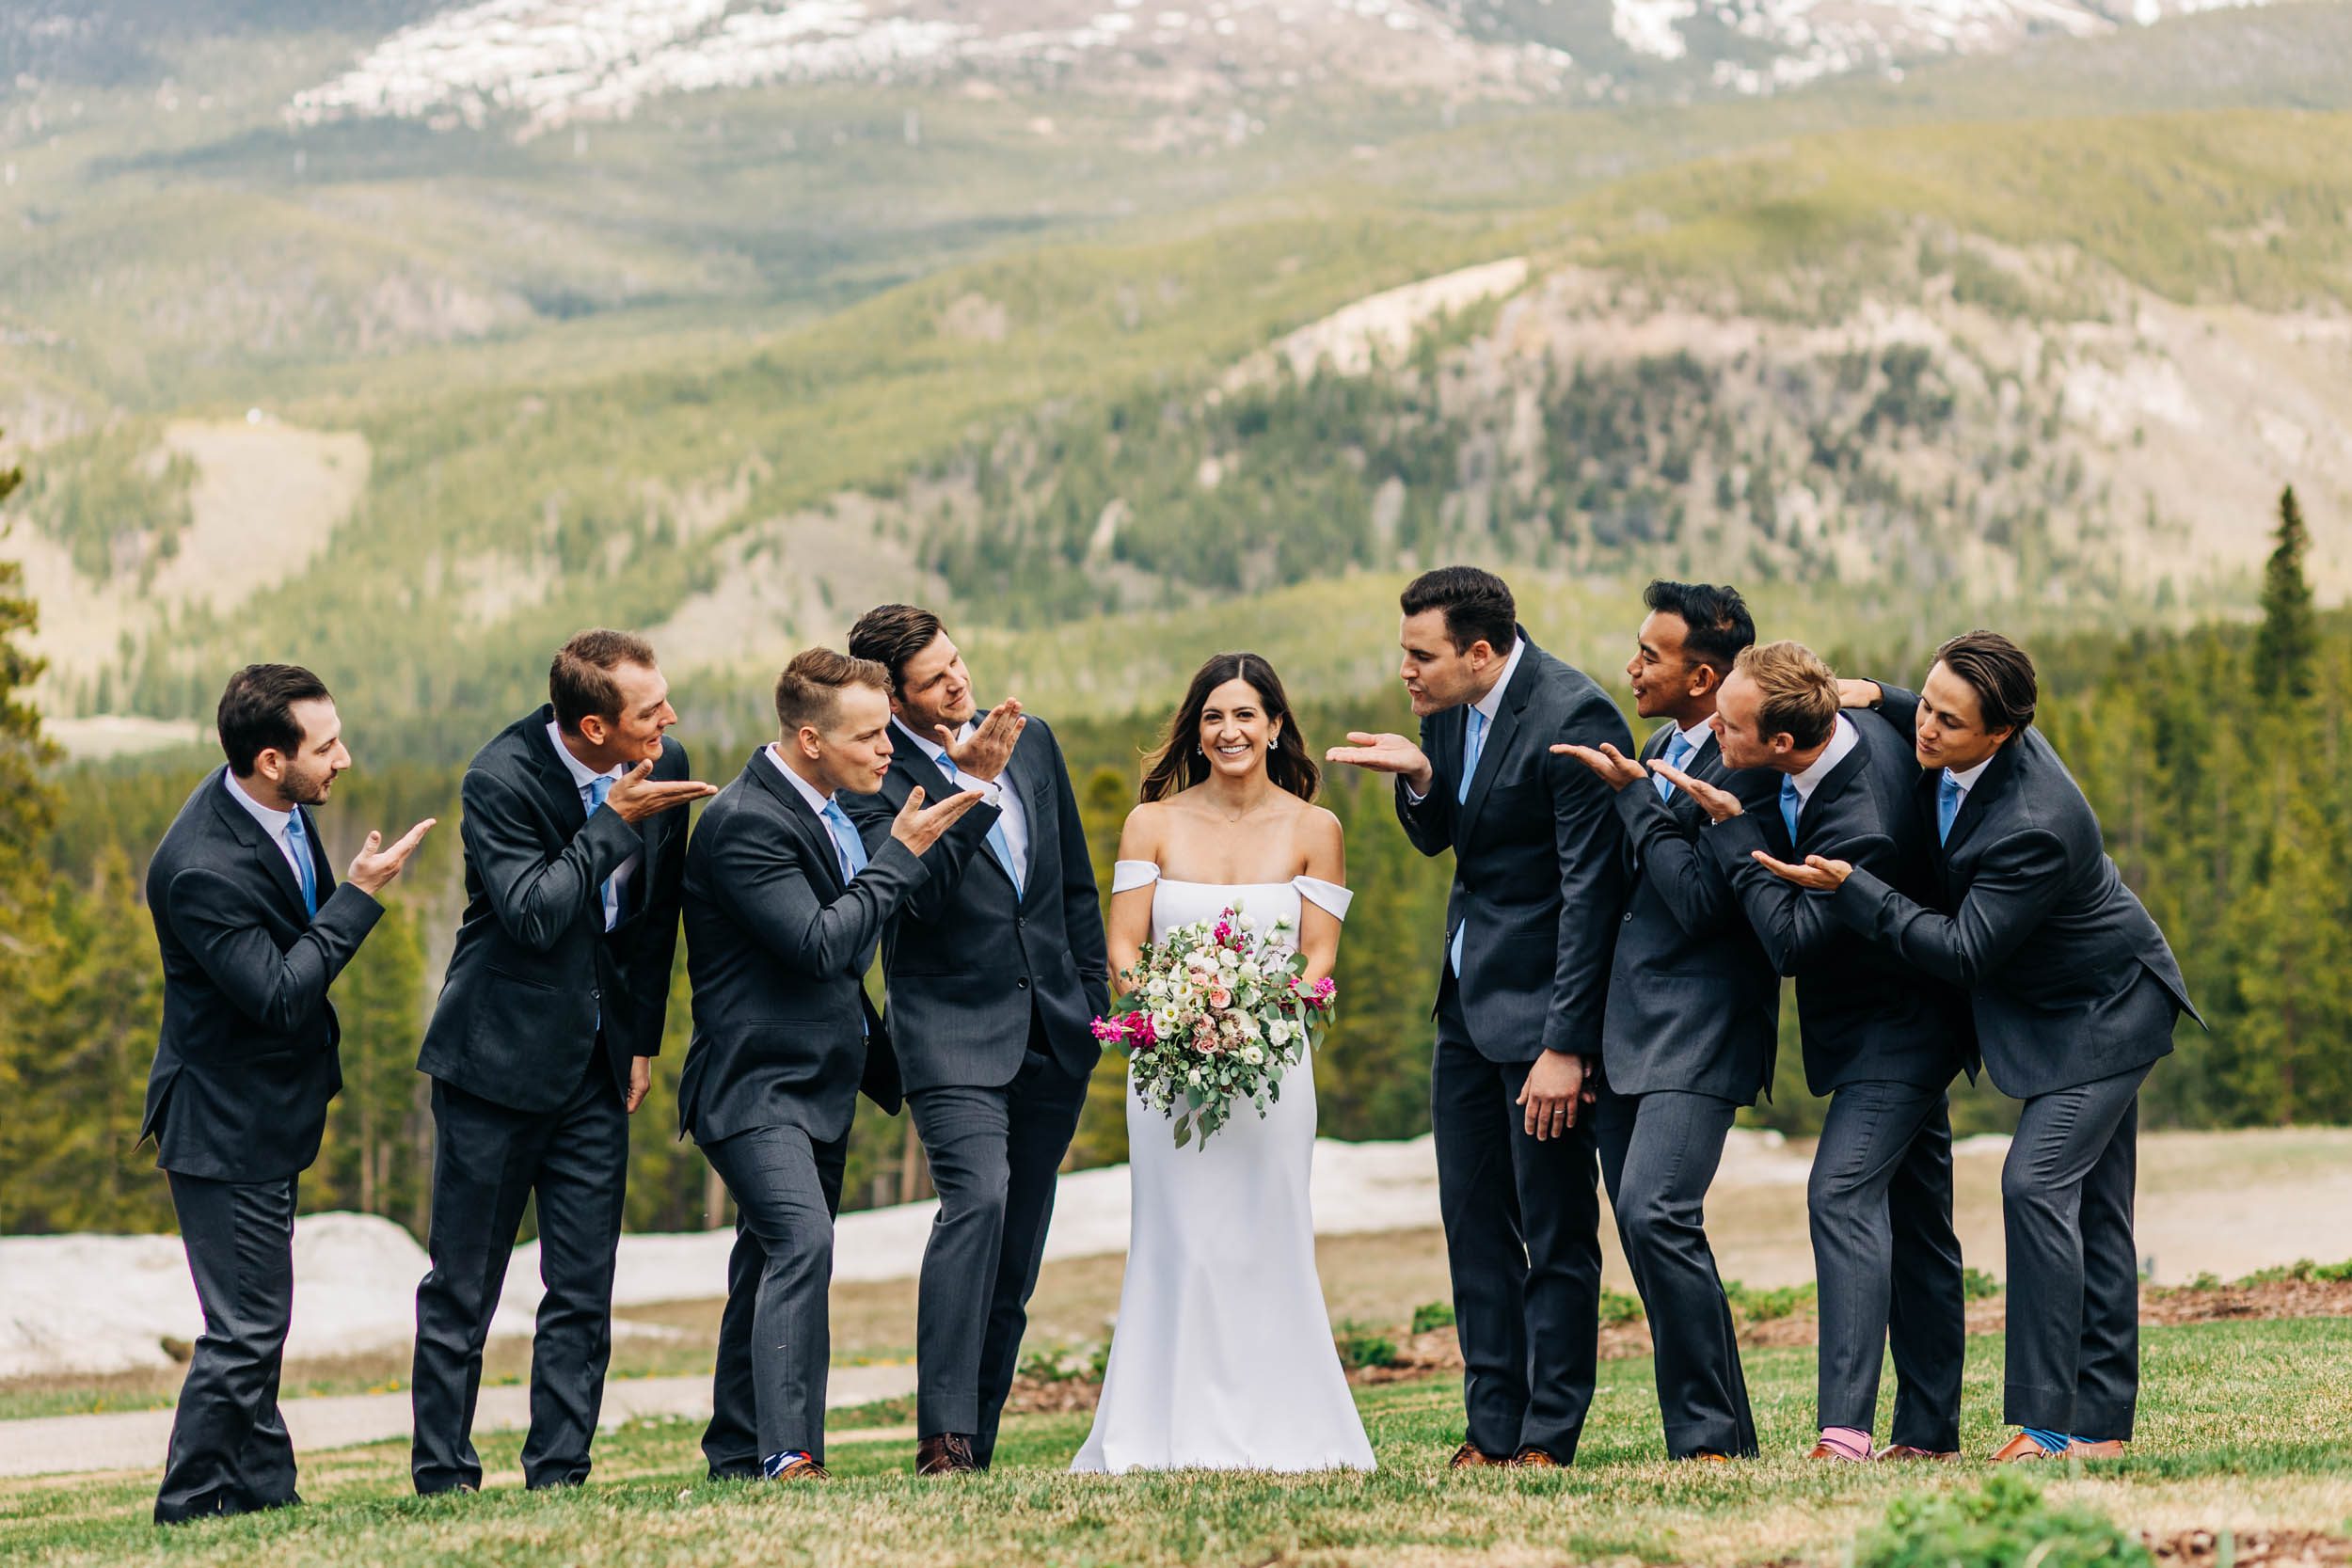 fun wedding party photo of groomsmen blowing kisses to bride